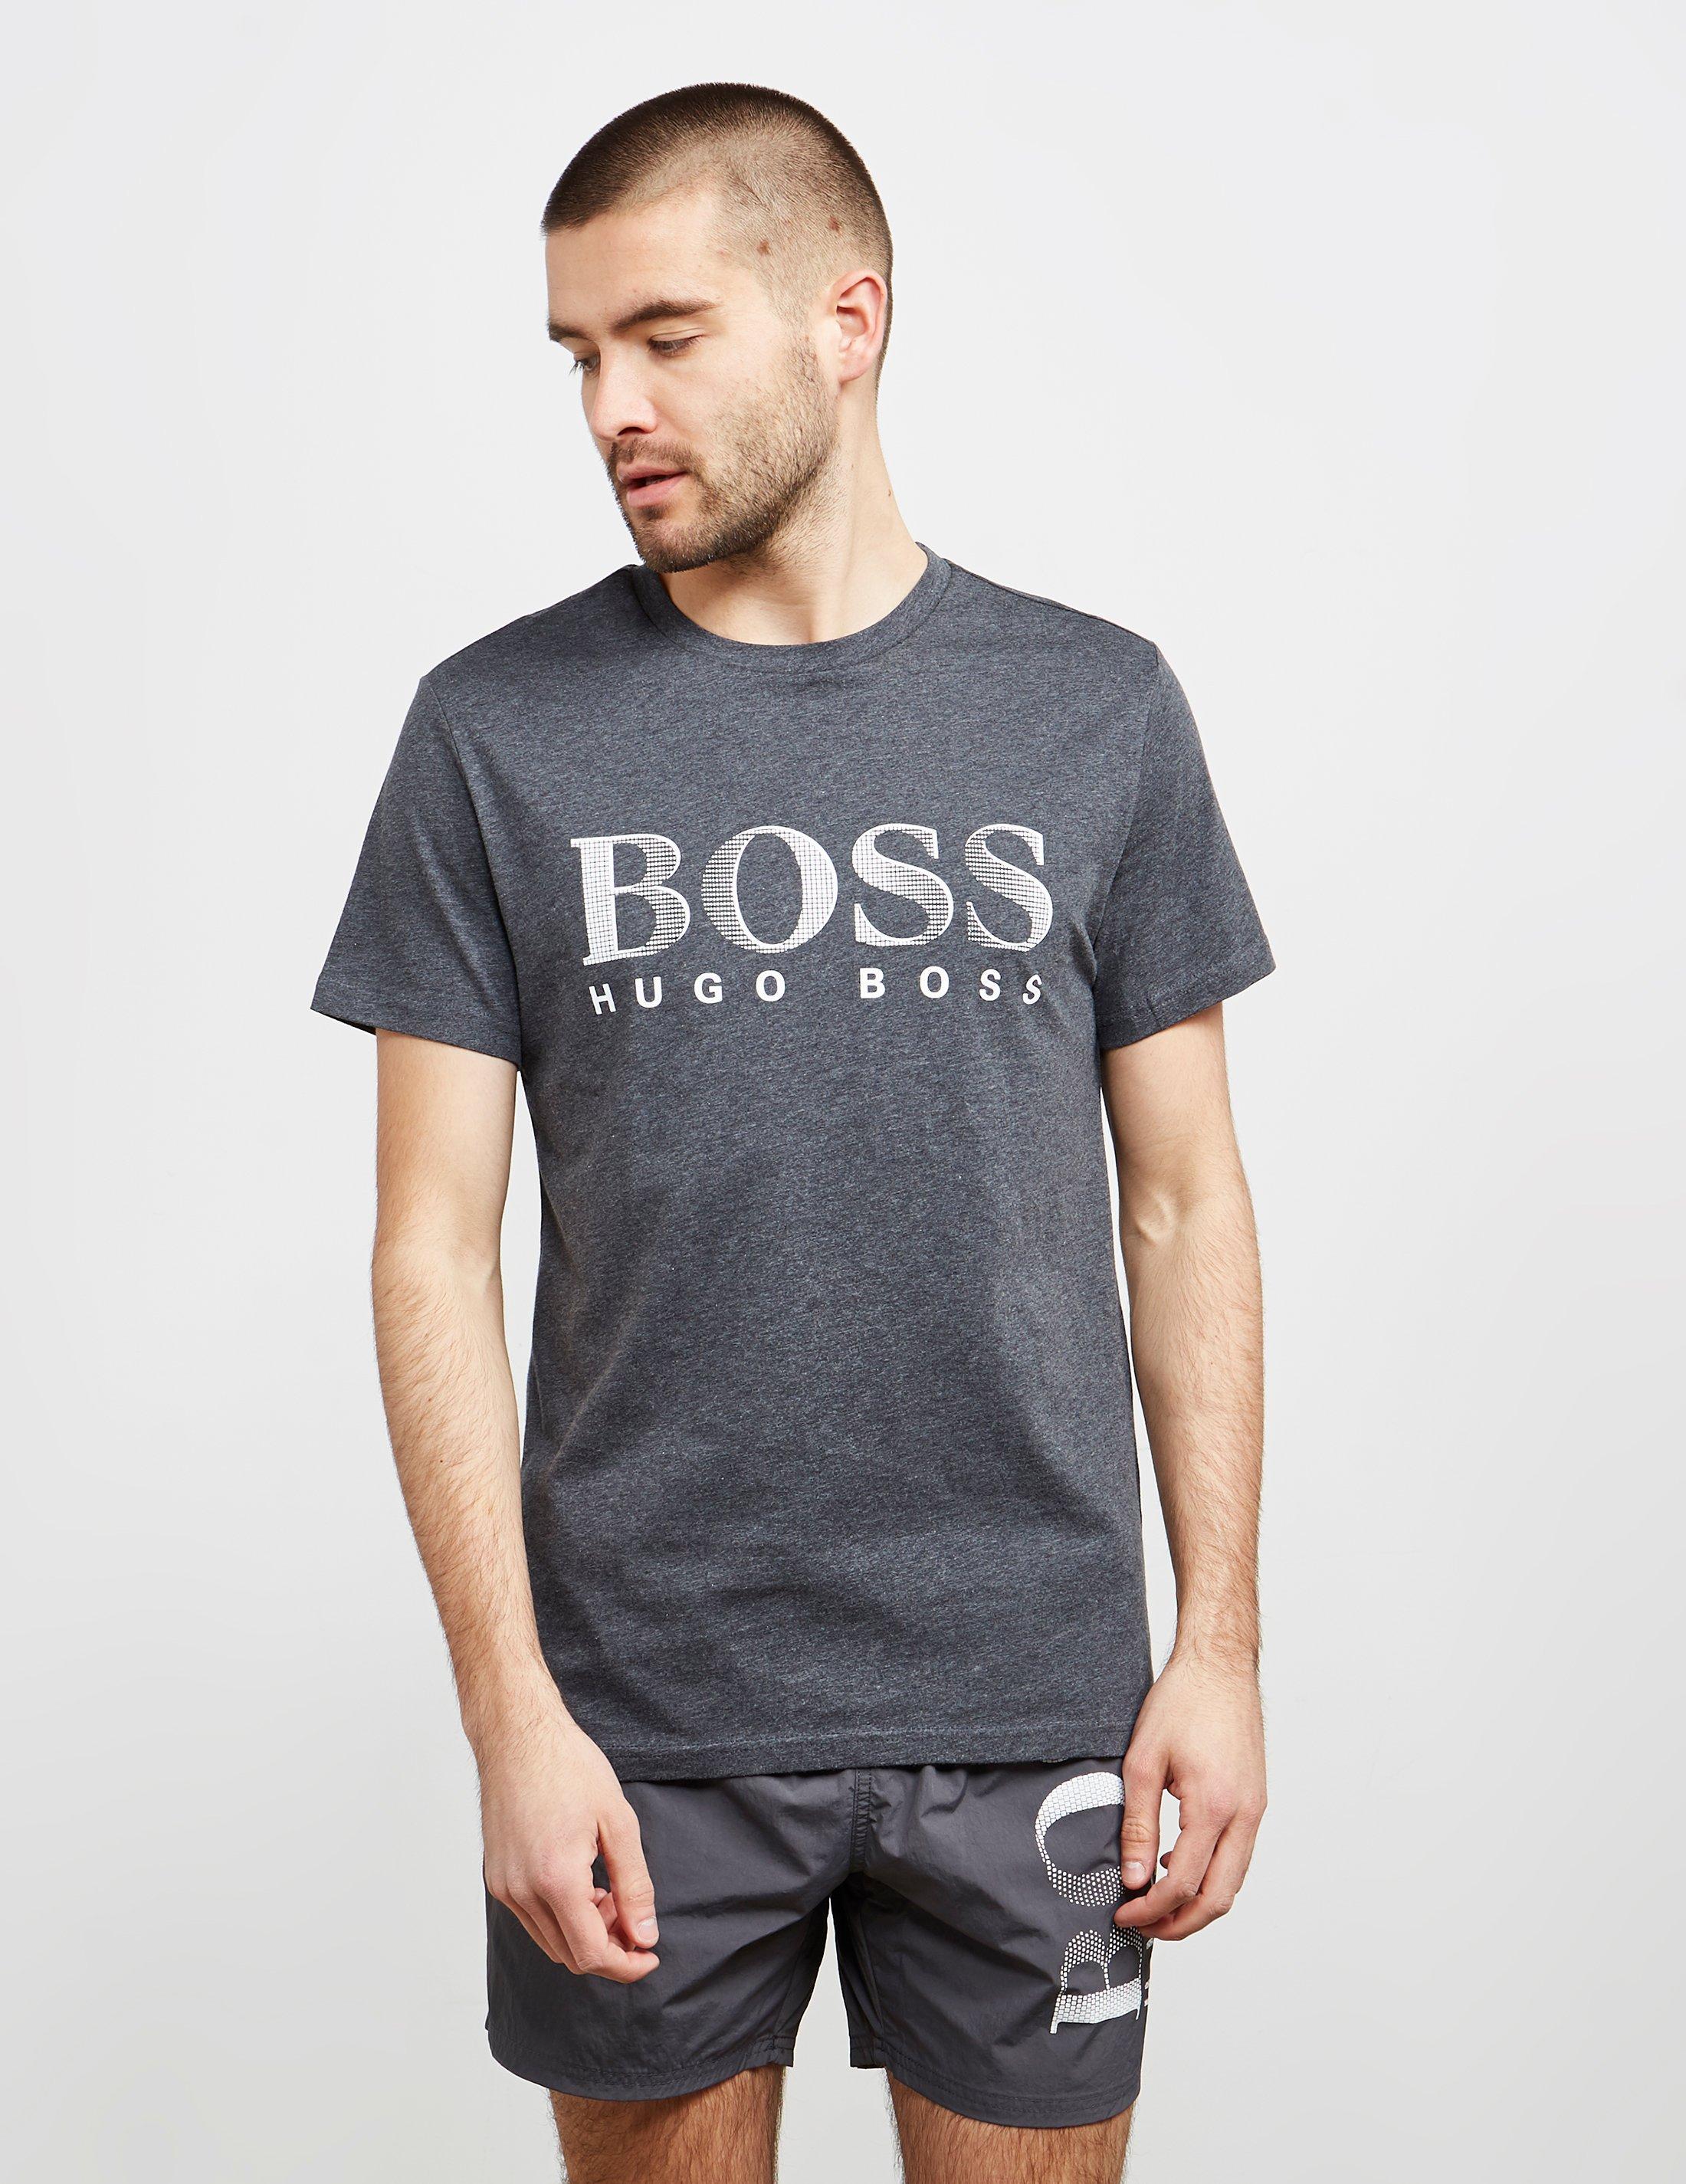 BOSS by HUGO BOSS Cotton Uva Logo Short Sleeve T-shirt Grey in Gray for Men  - Lyst